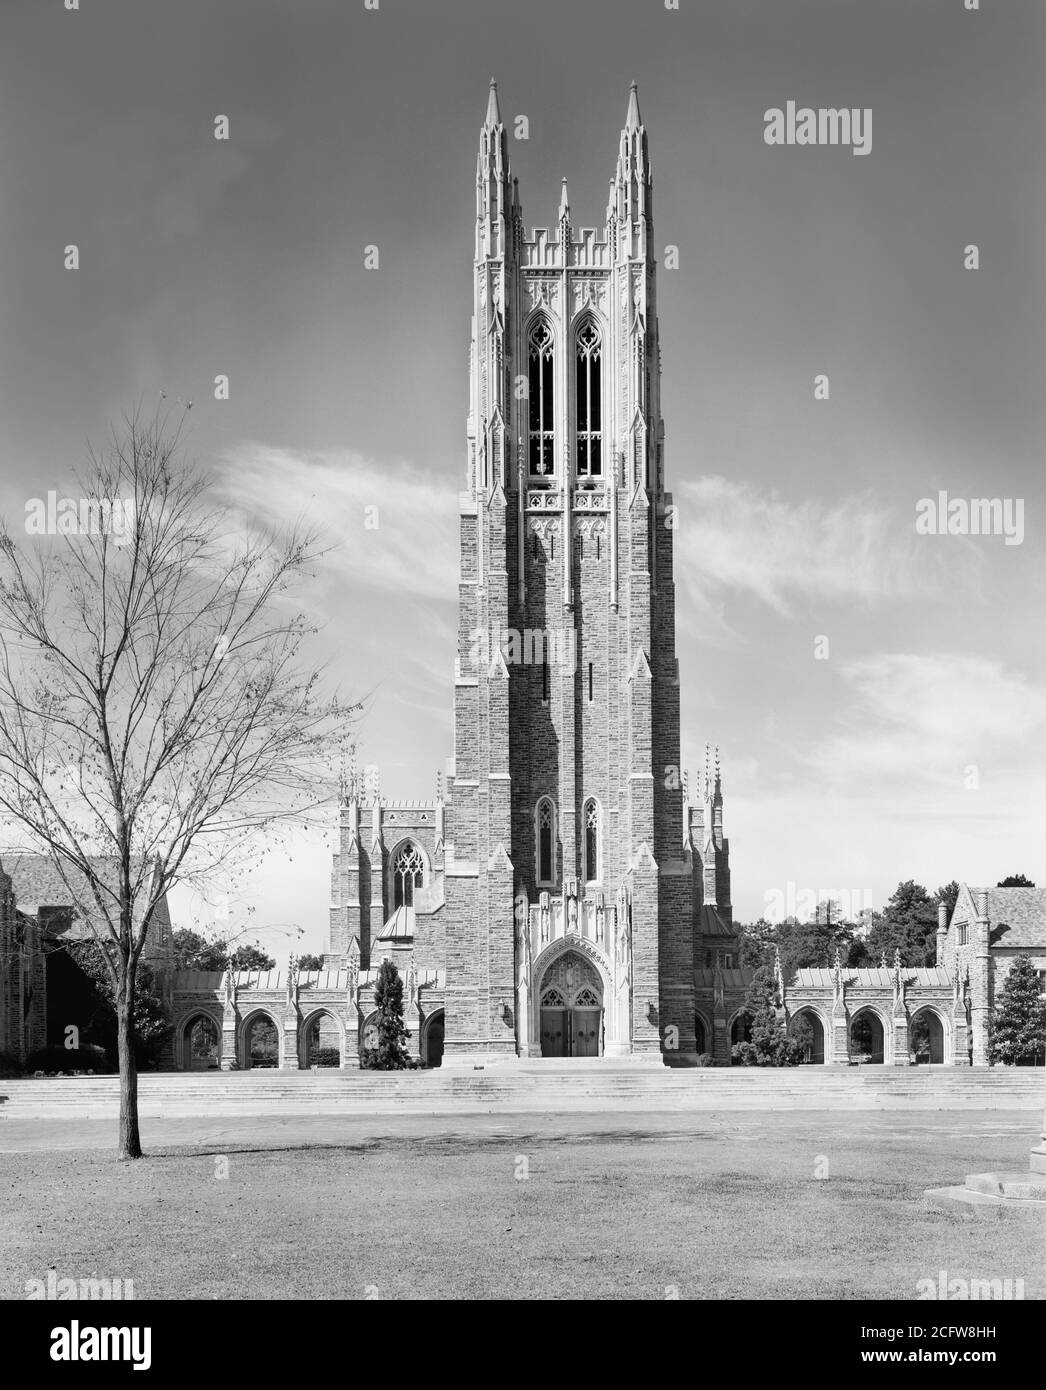 University Tower, Duke University, Durham, North Carolina, USA, Frances Benjamin Johnston, Carnegie Survey of the Architecture of the South, 1938 Stockfoto